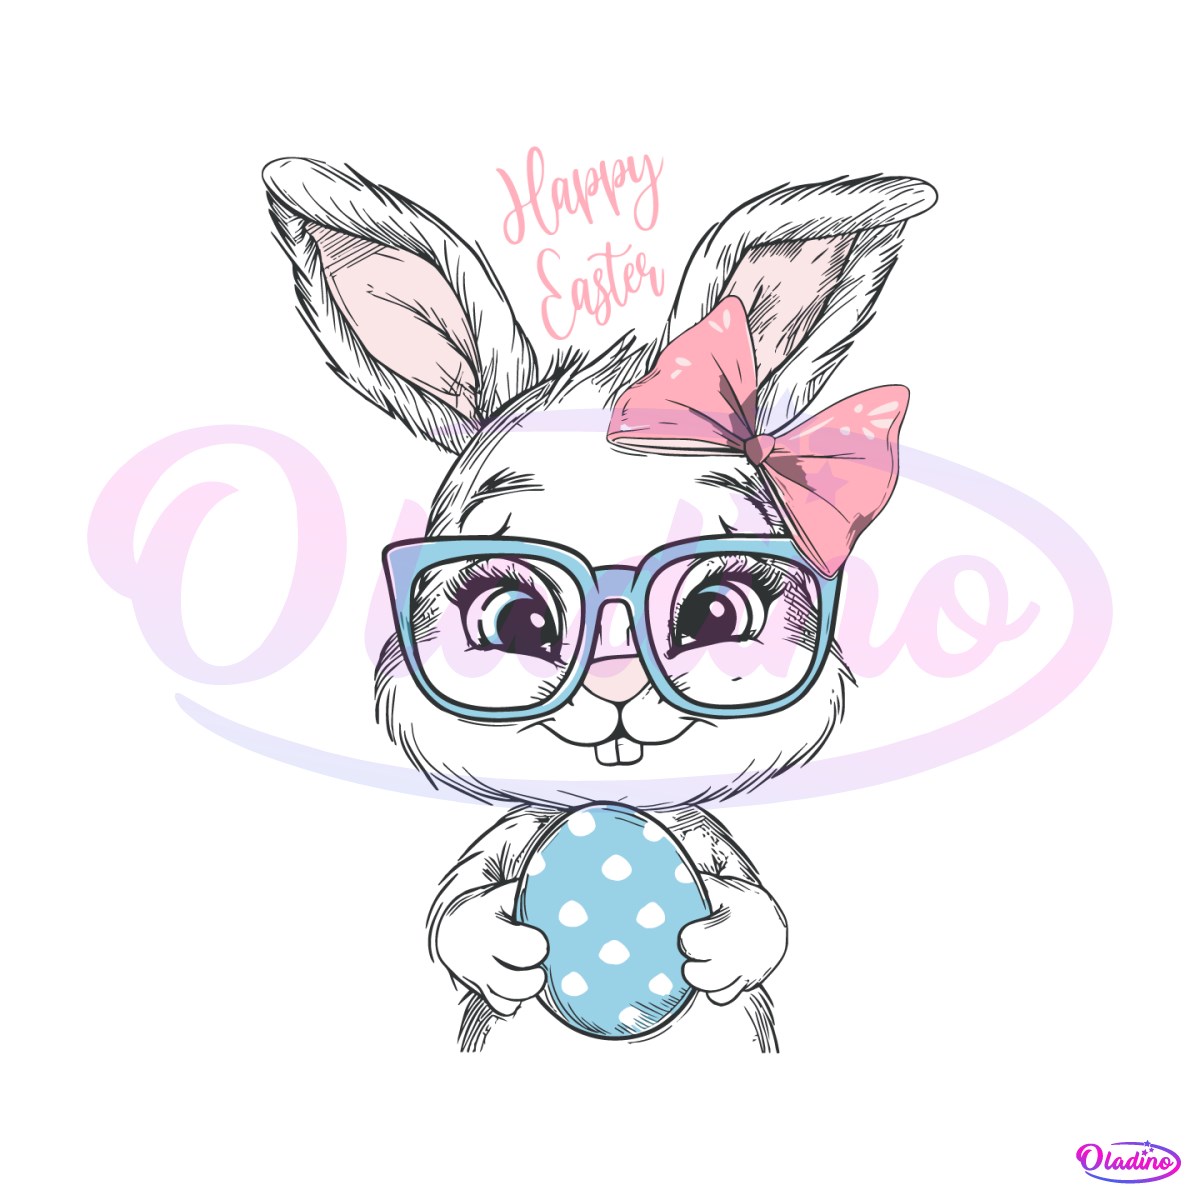 retro-happy-easter-bunny-egg-svg